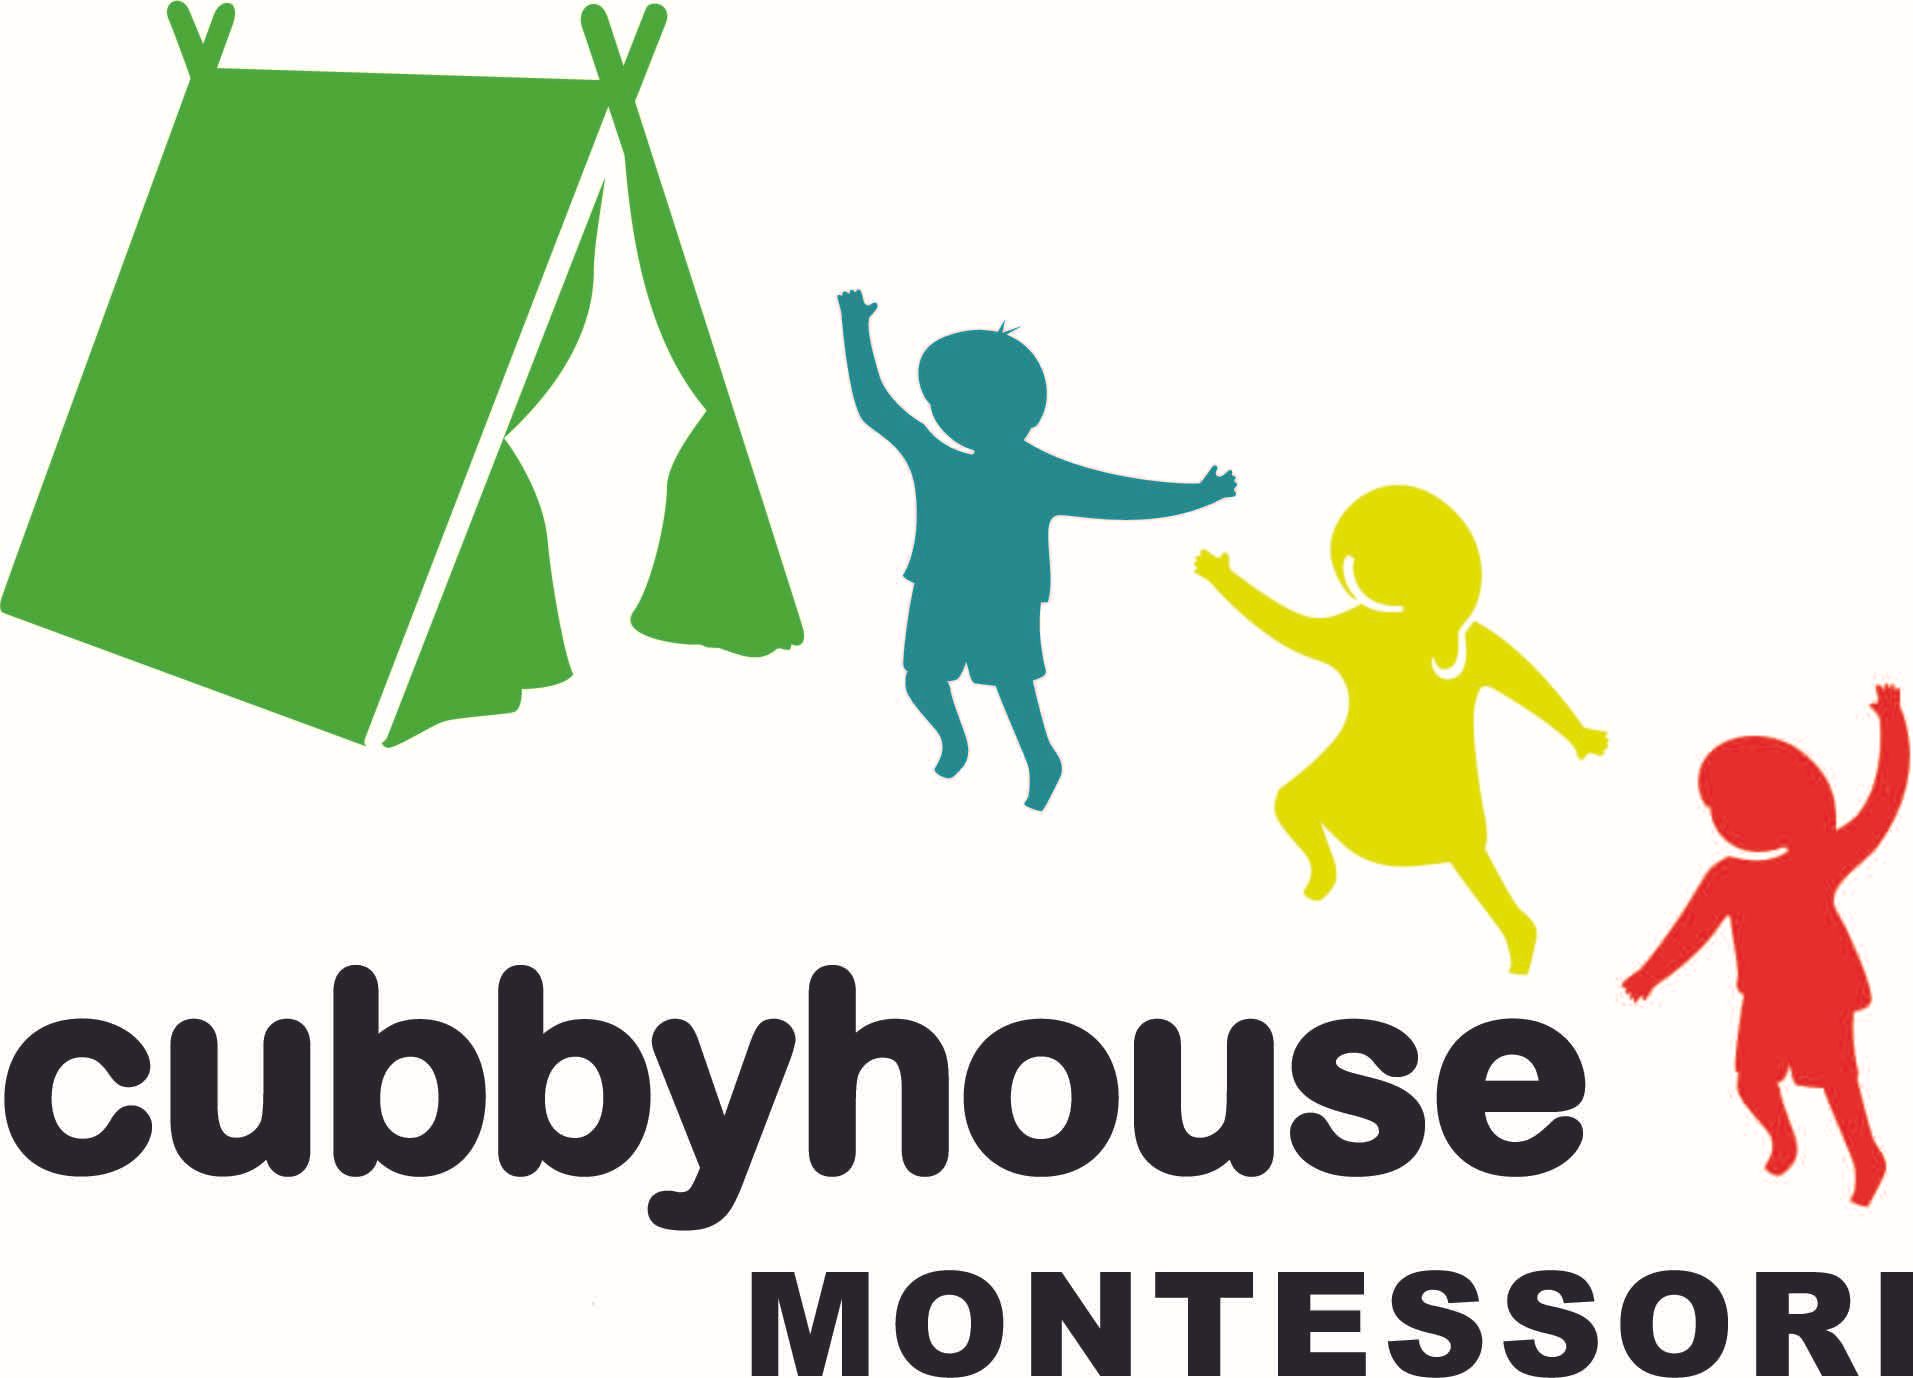 Cubbyhouse Montessori